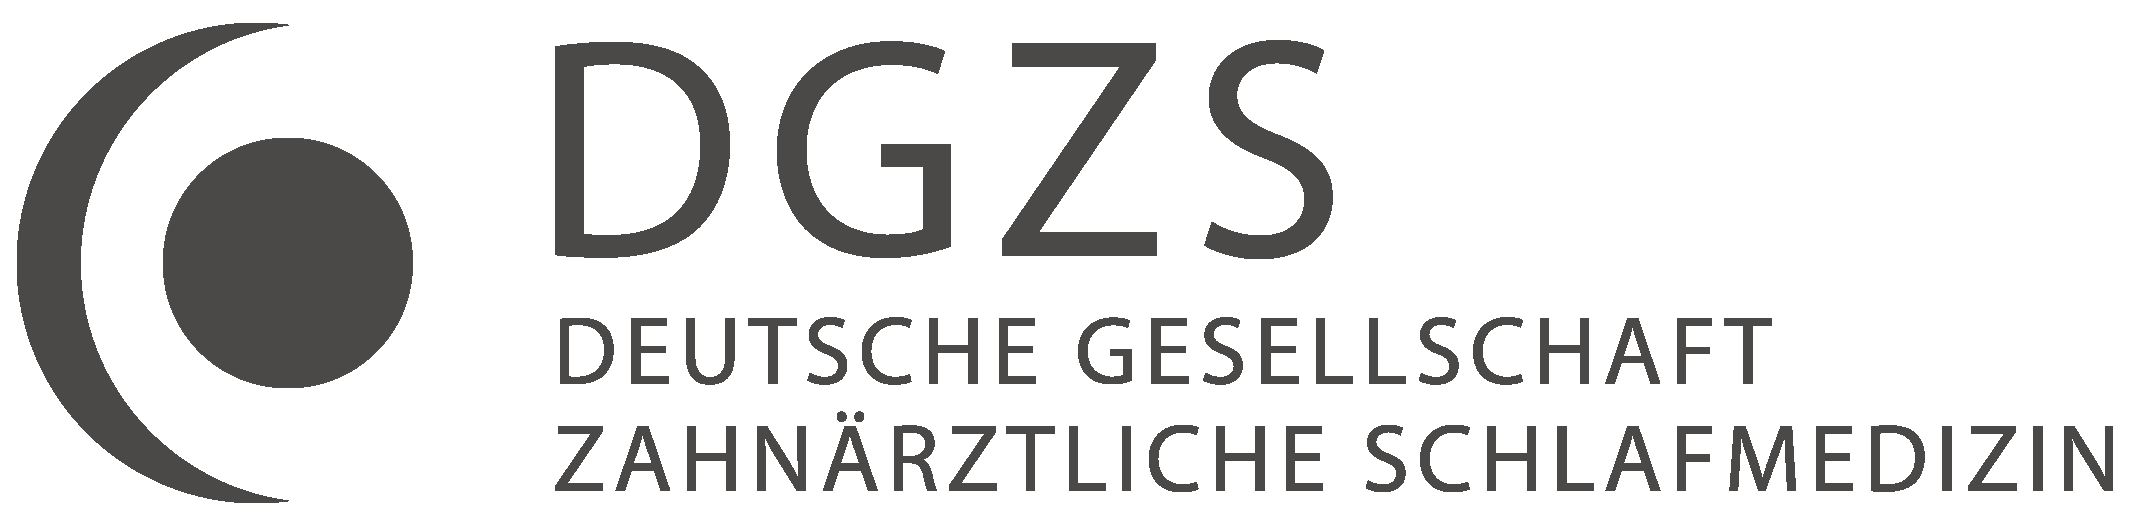 dgzs_logo_grey